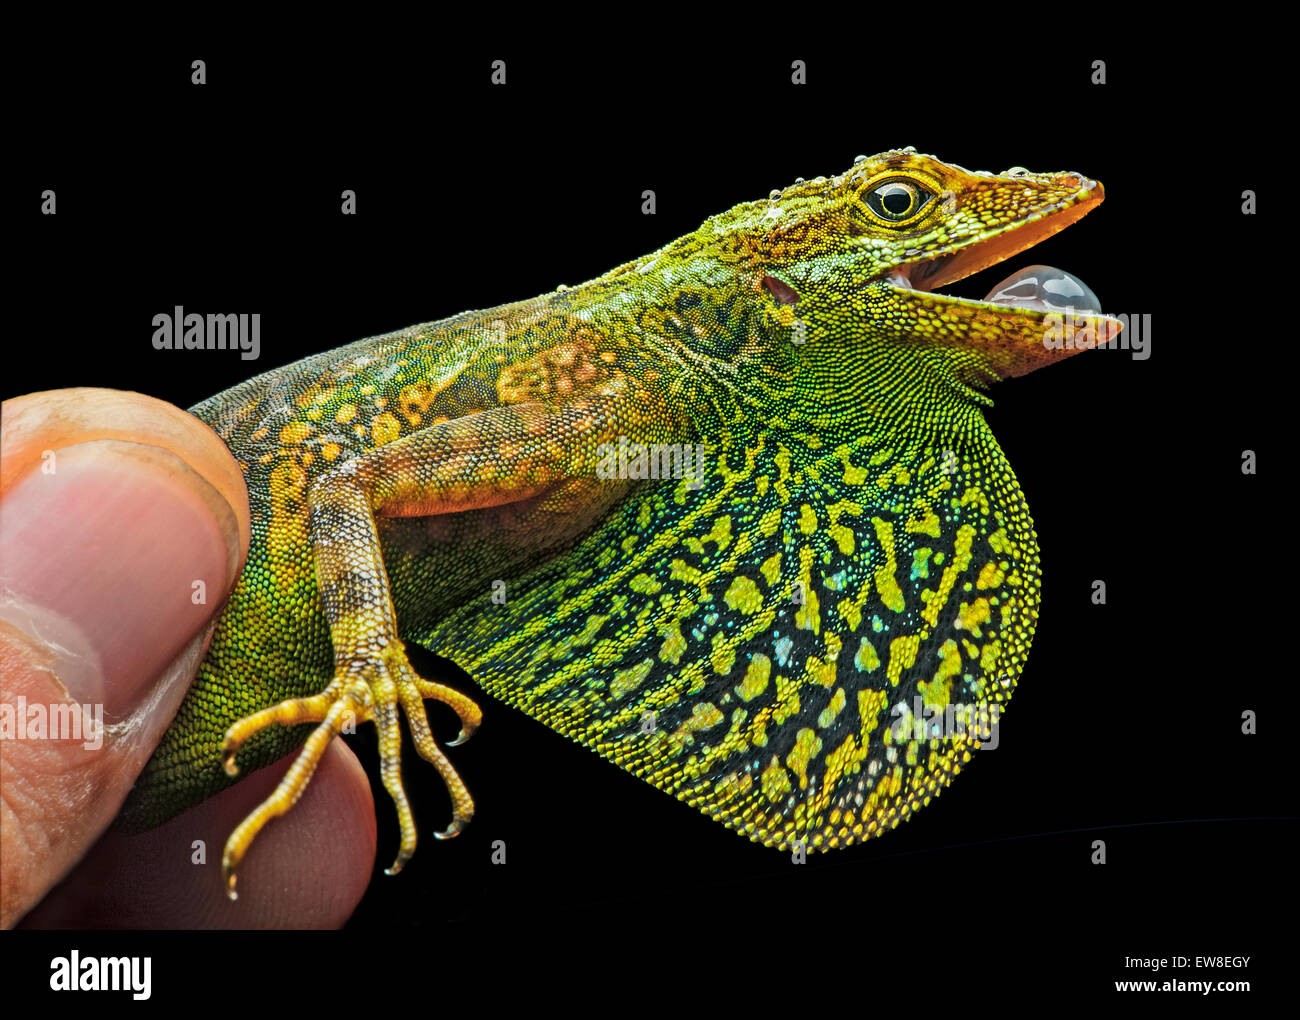 Male Gem Anole lizard (Anolis gemmosus), exposing its turquoise-yellowish patterned dewlap, Mindo, Ecuador Stock Photo